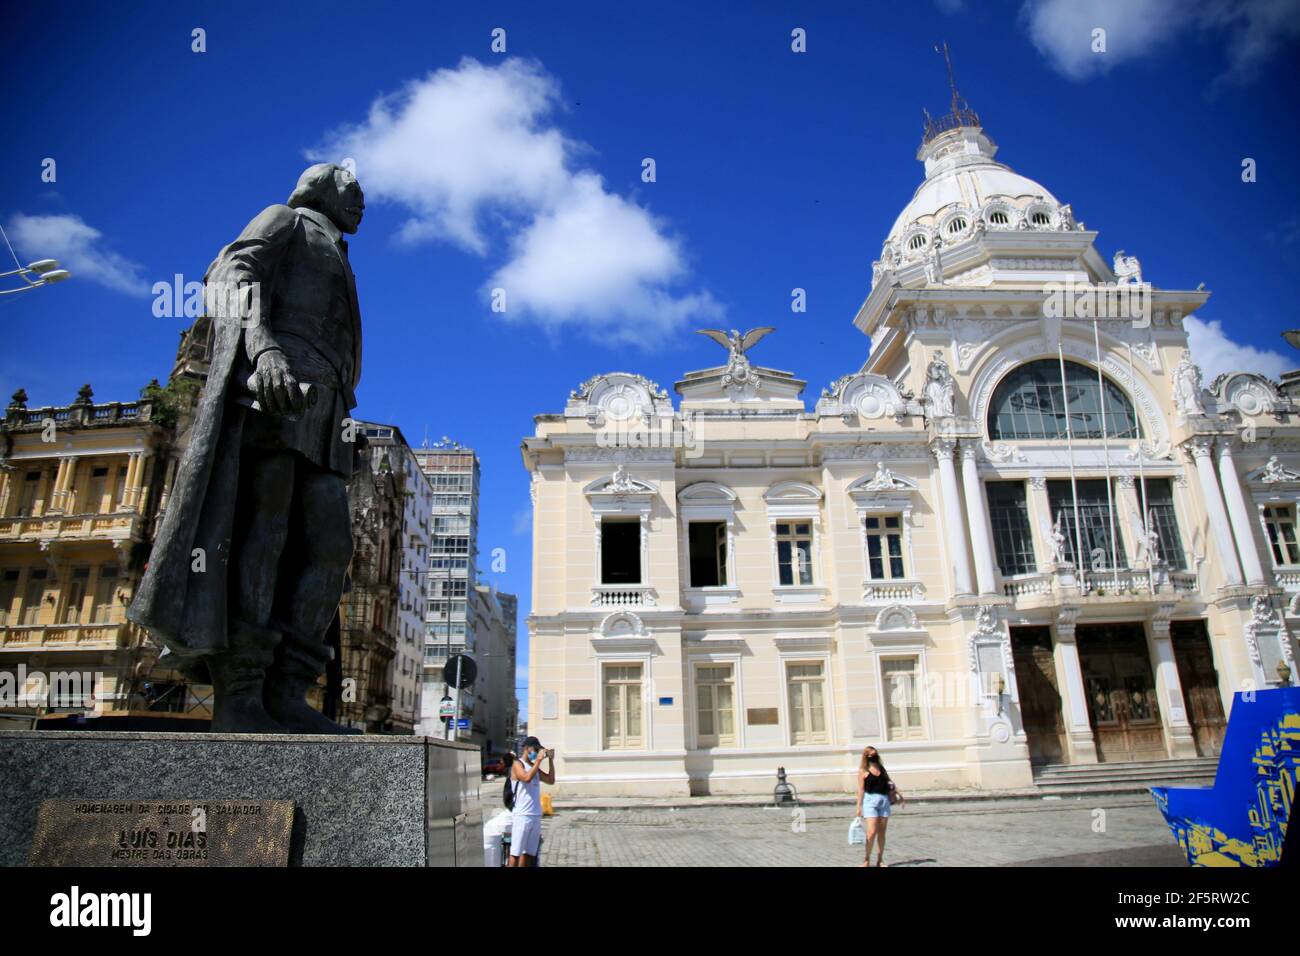 salvador, bahia, brasilien - 10. februar 2021: Statue von Thome de Sousa und in der Tiefe der Rio Branco Palast in der Stadt Salvador. Stockfoto